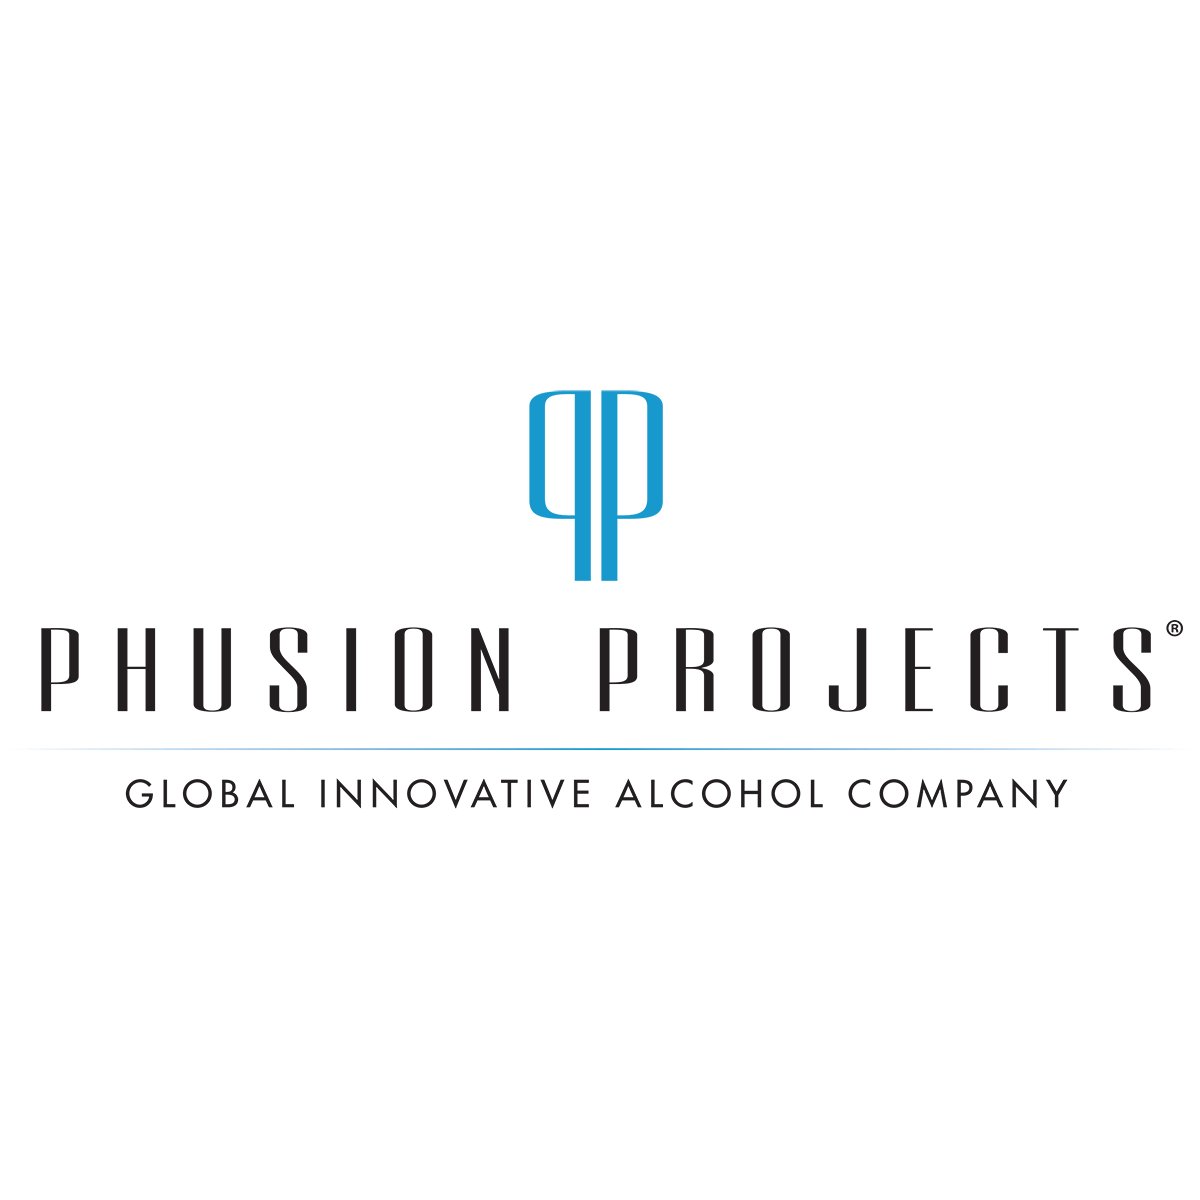 Alcohol Company Logo - Phusion Projects: Four Loko, John Dalys, Earthquake & Moskato Life